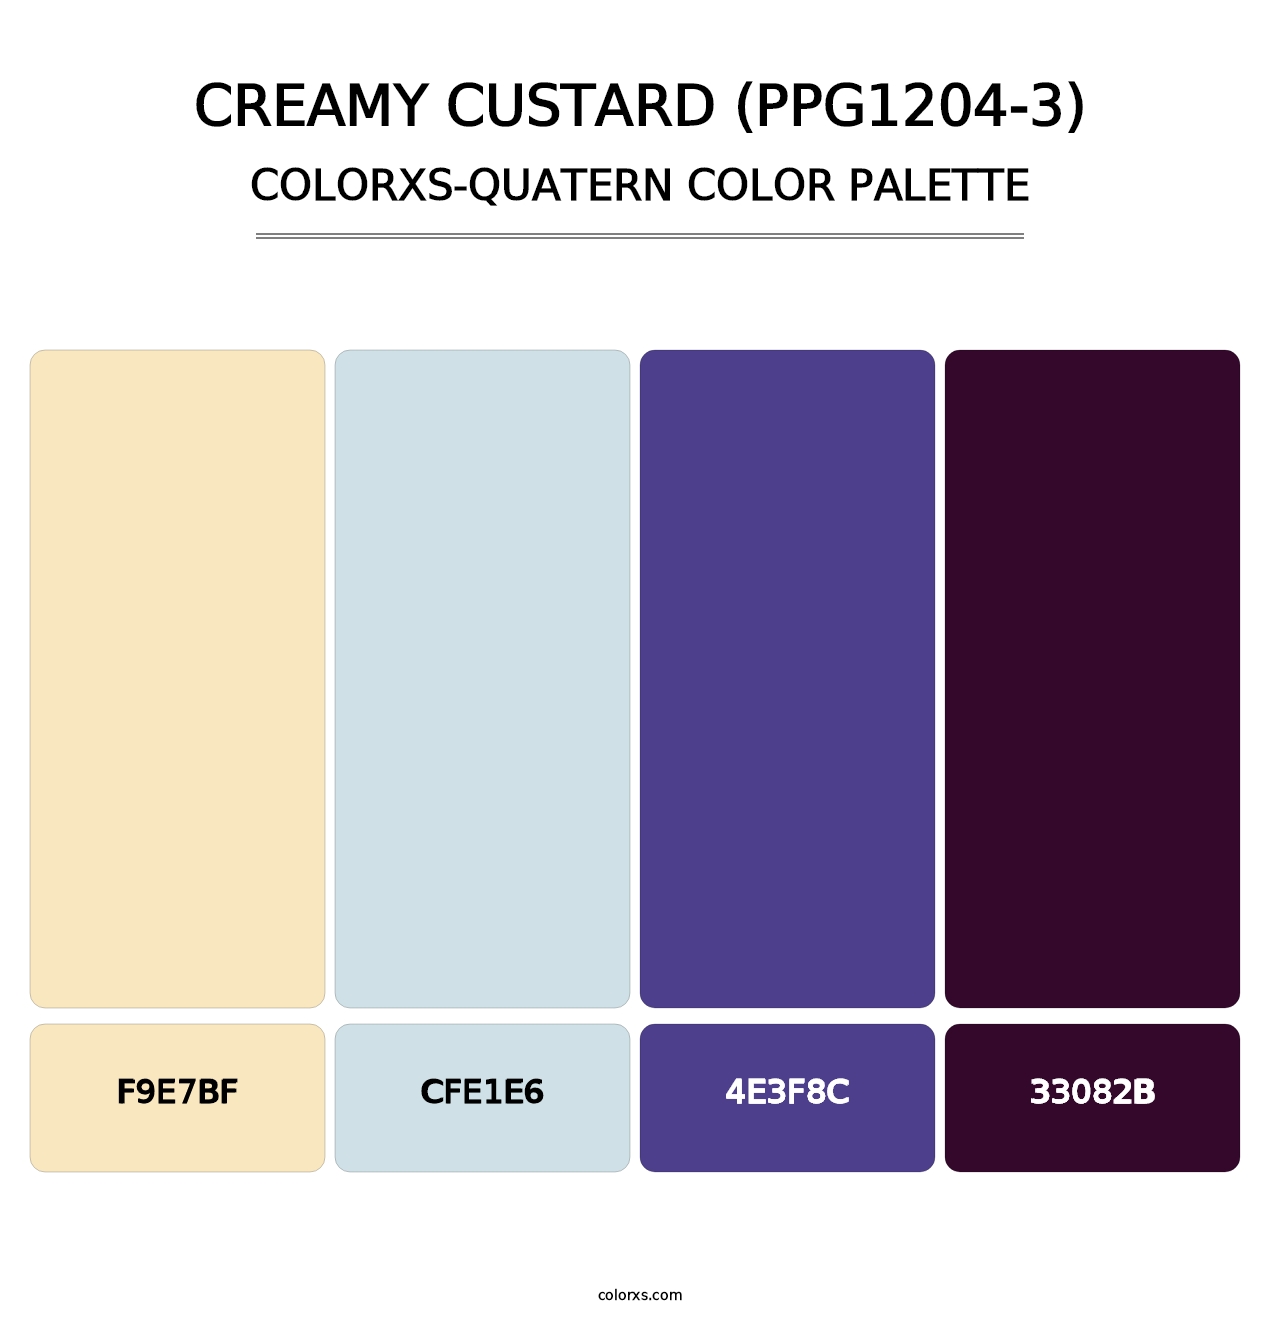 Creamy Custard (PPG1204-3) - Colorxs Quatern Palette